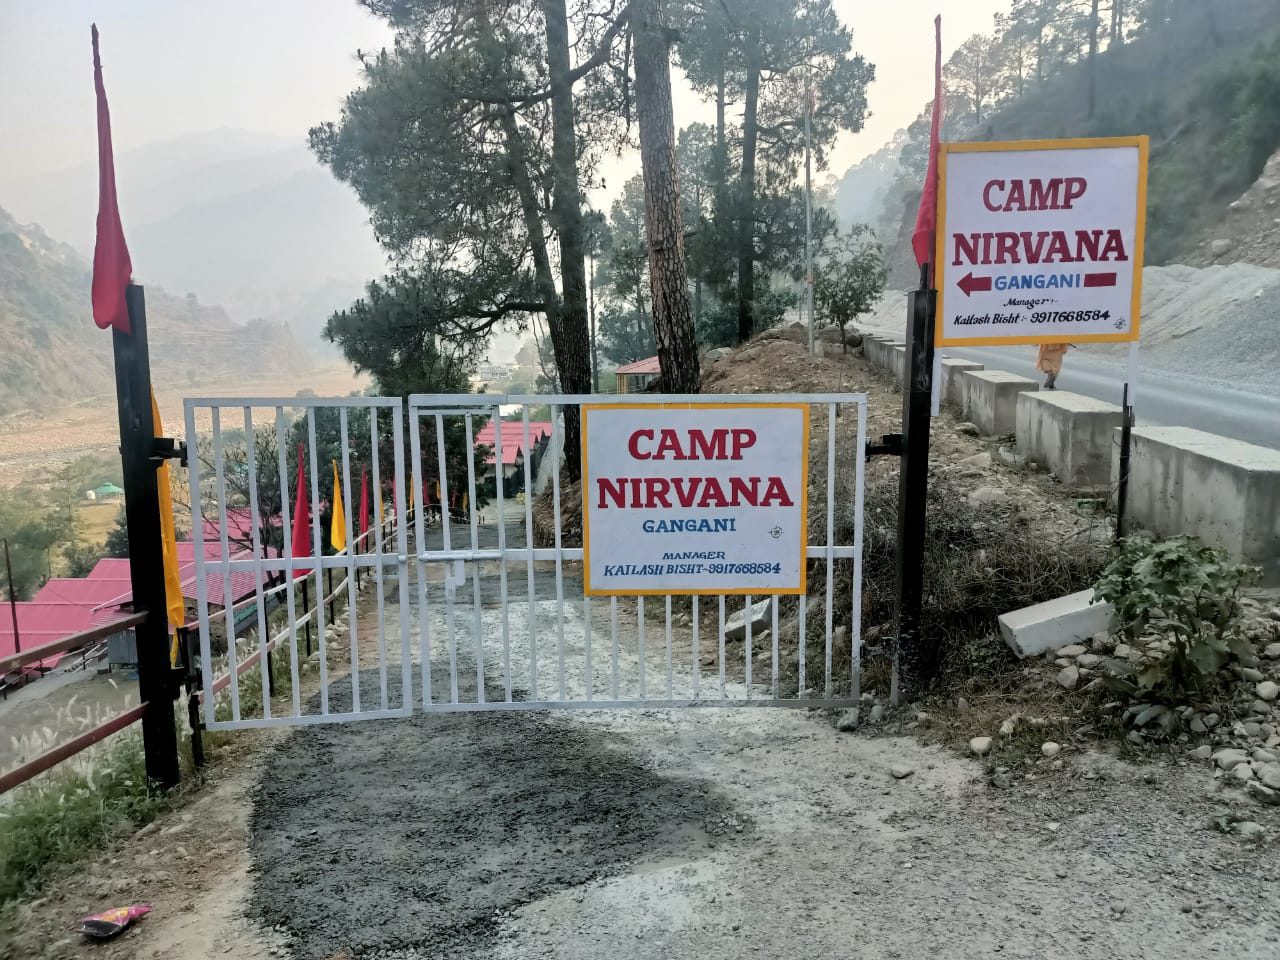 Camp Nirvana